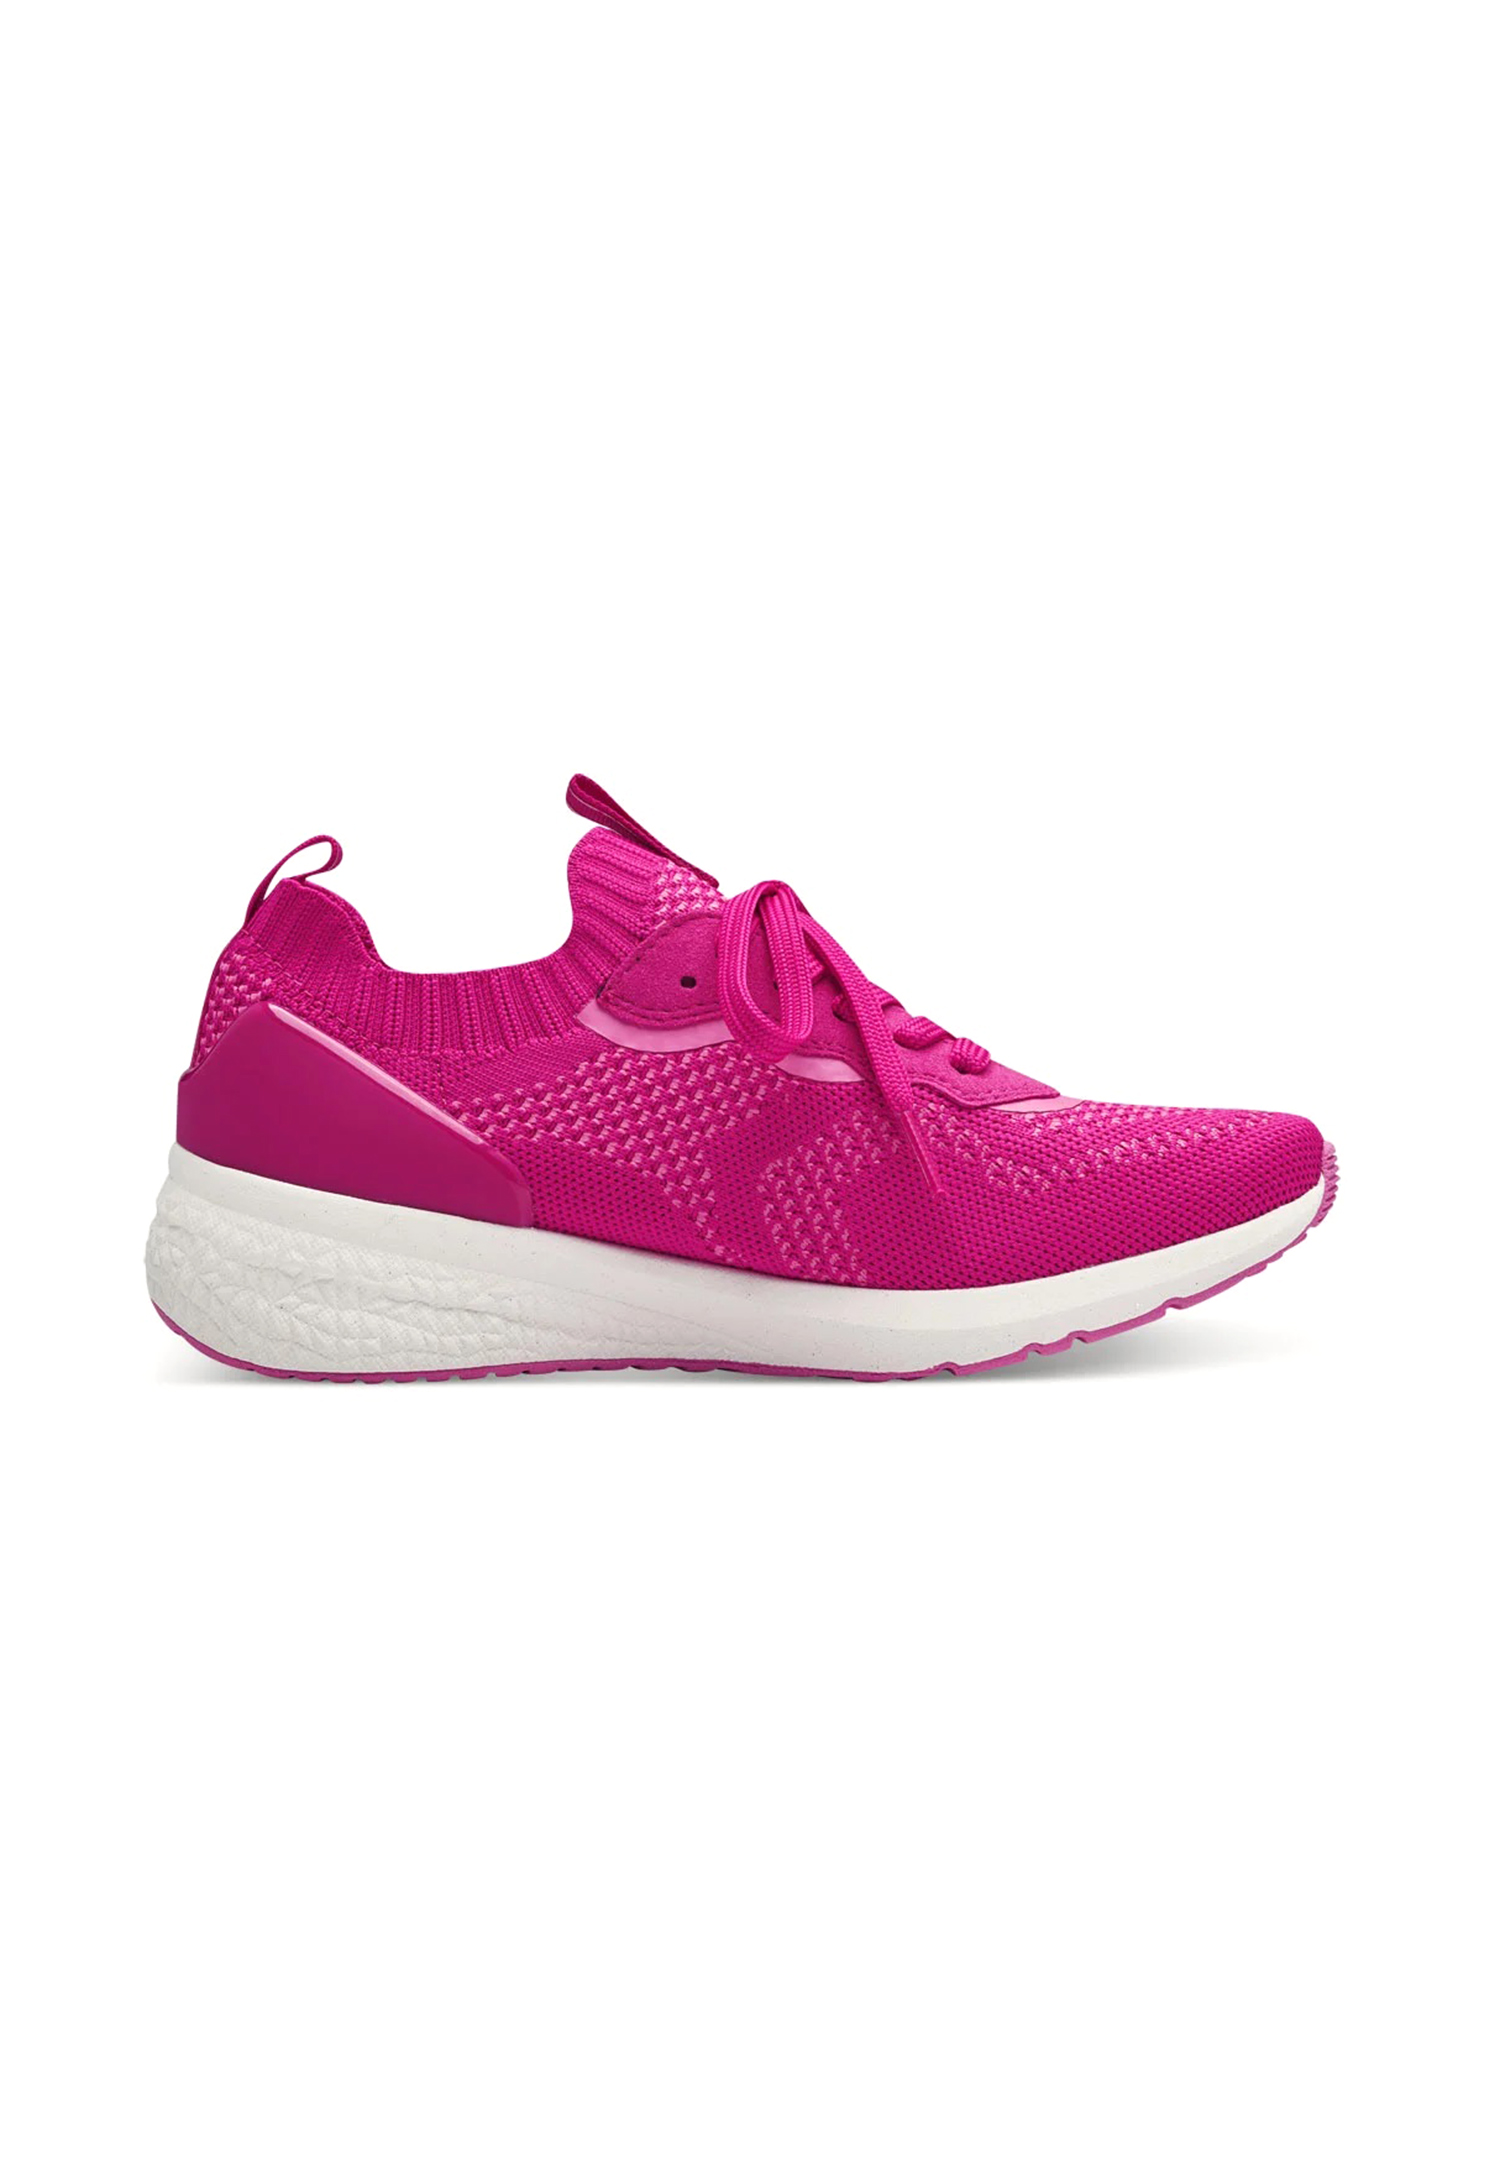 Tamaris Damen Low Top Sneaker  Frauen Schuhe Vegan M2373942 Pink 